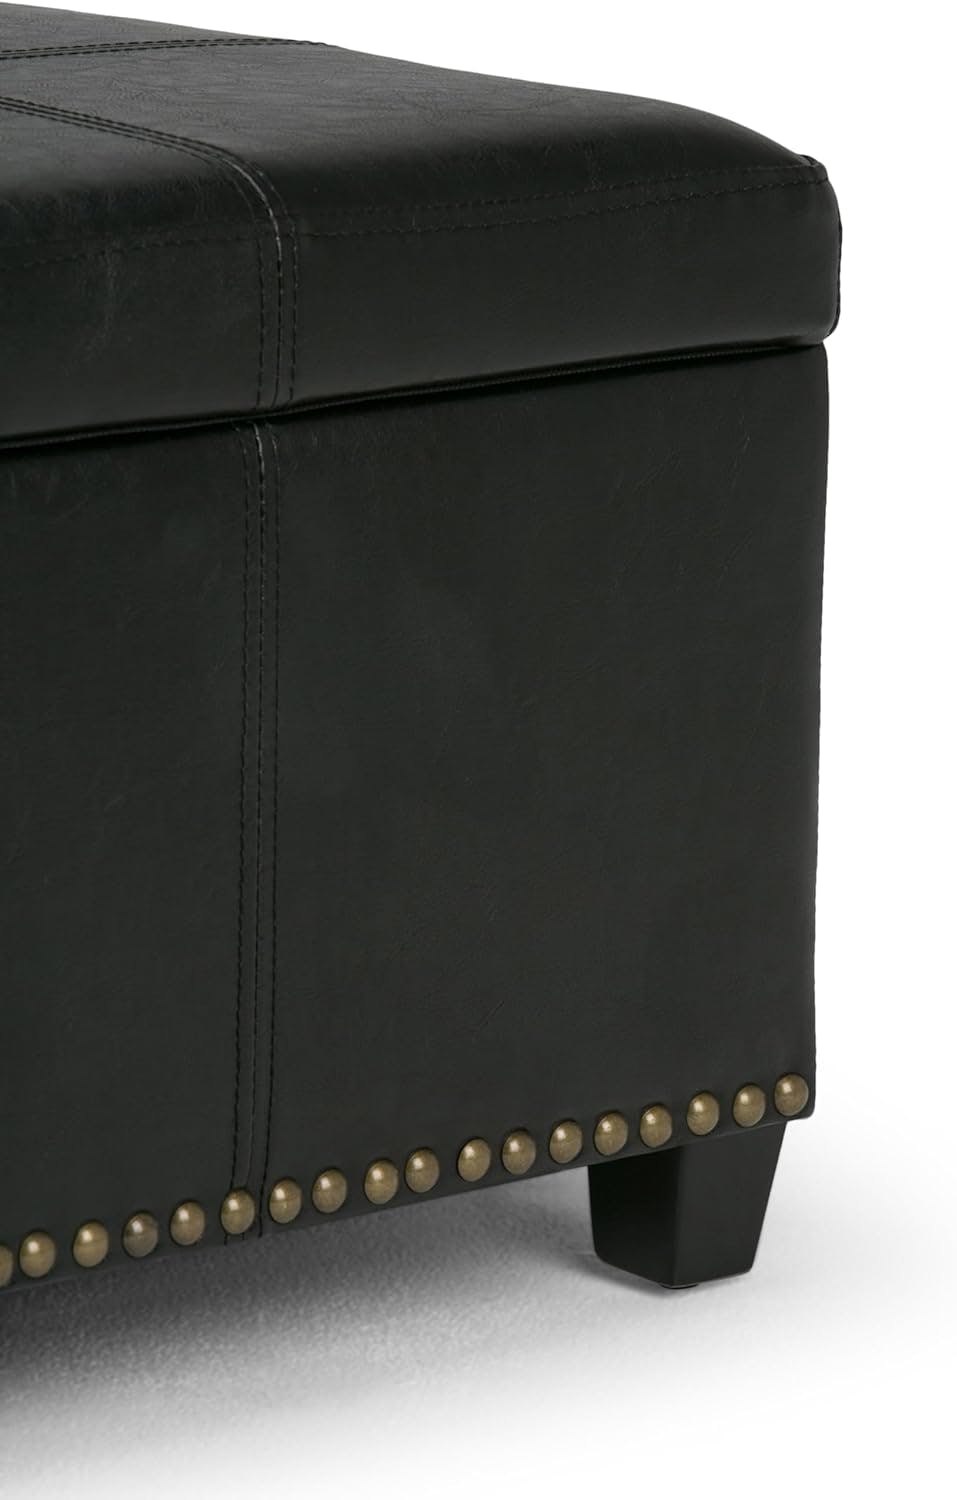 Midnight Black Bonded Leather Large Rectangular Storage Ottoman Bench